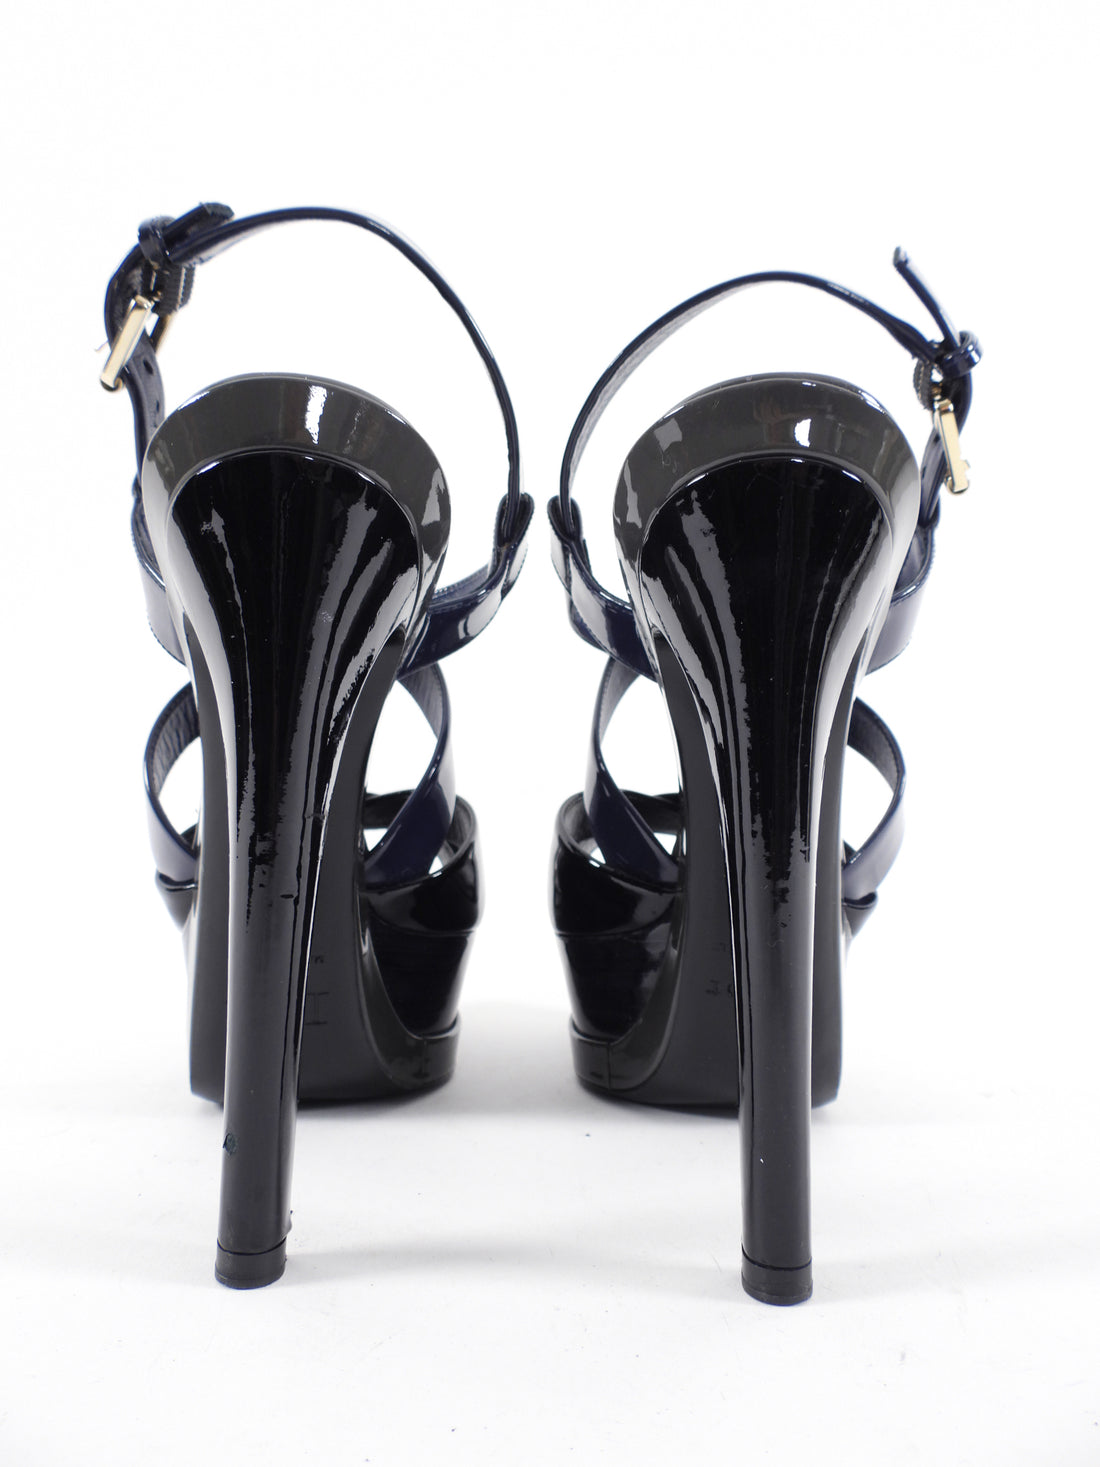 Christian Dior Black and Navy Patent Platform Heels - 38.5